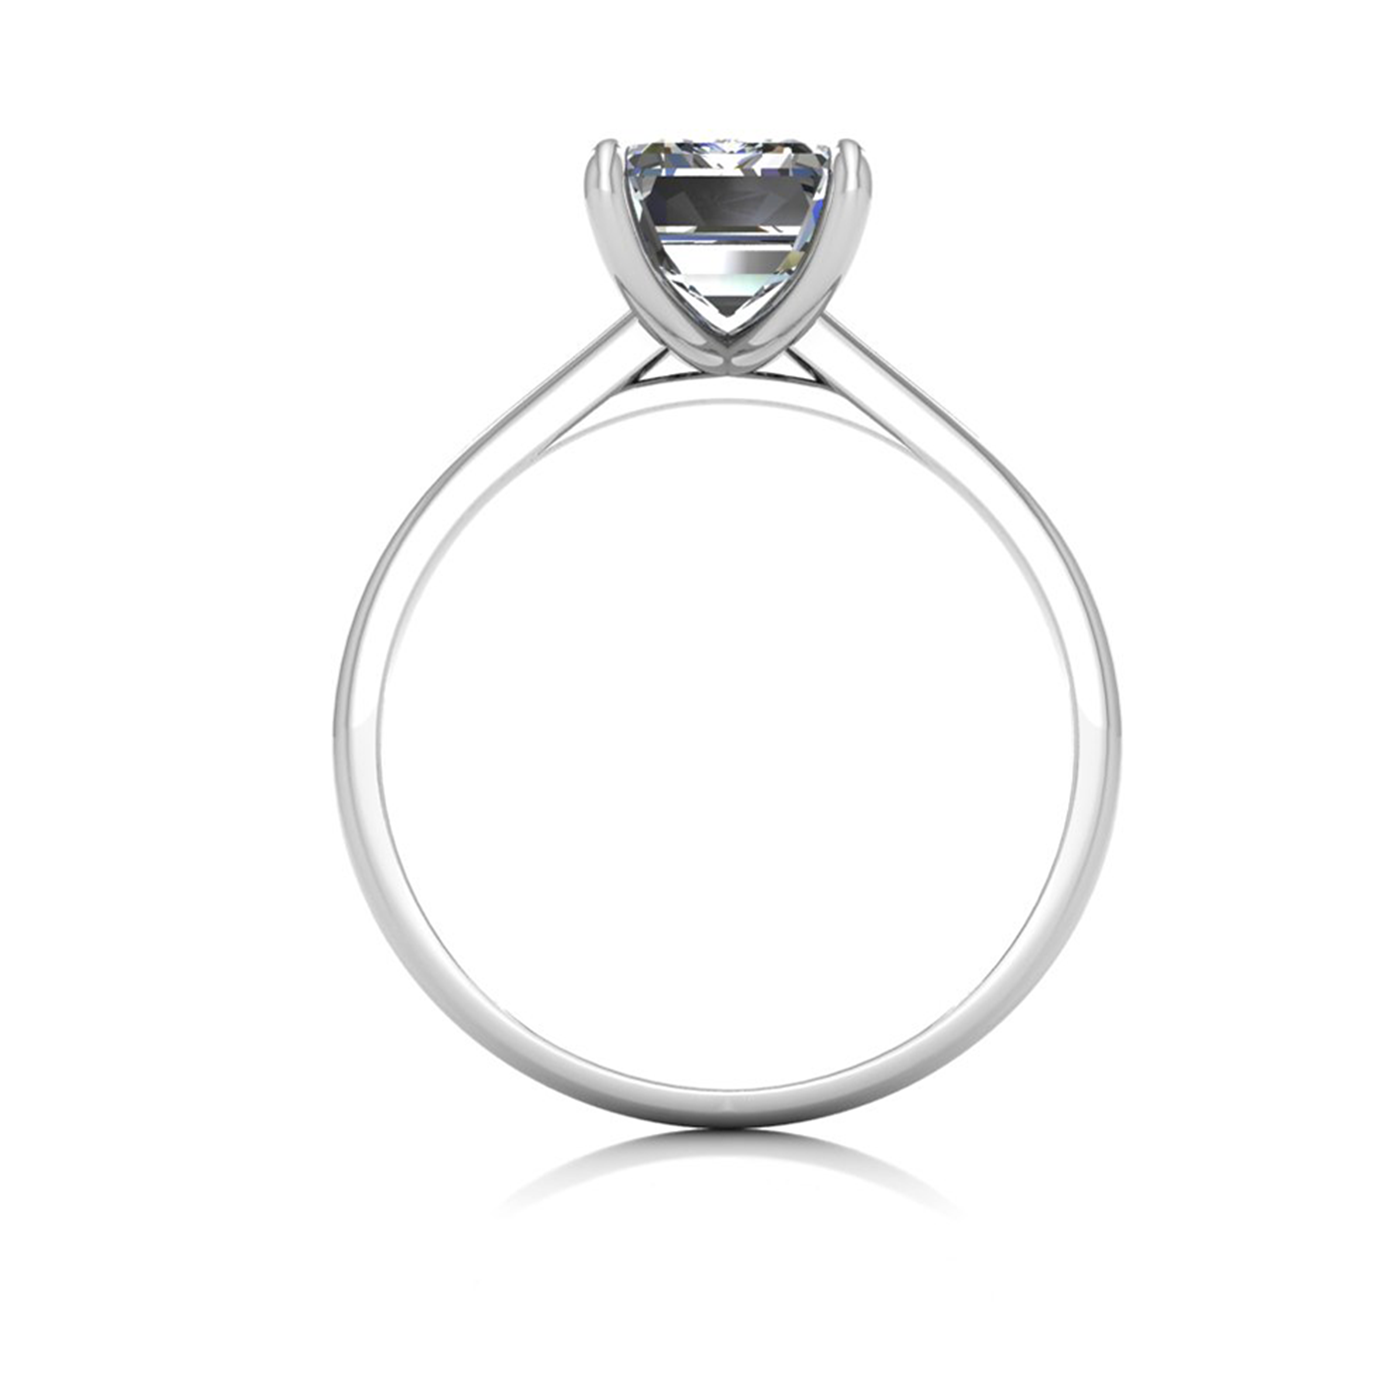 18k white gold 4 prongs emerald shape diamond ring